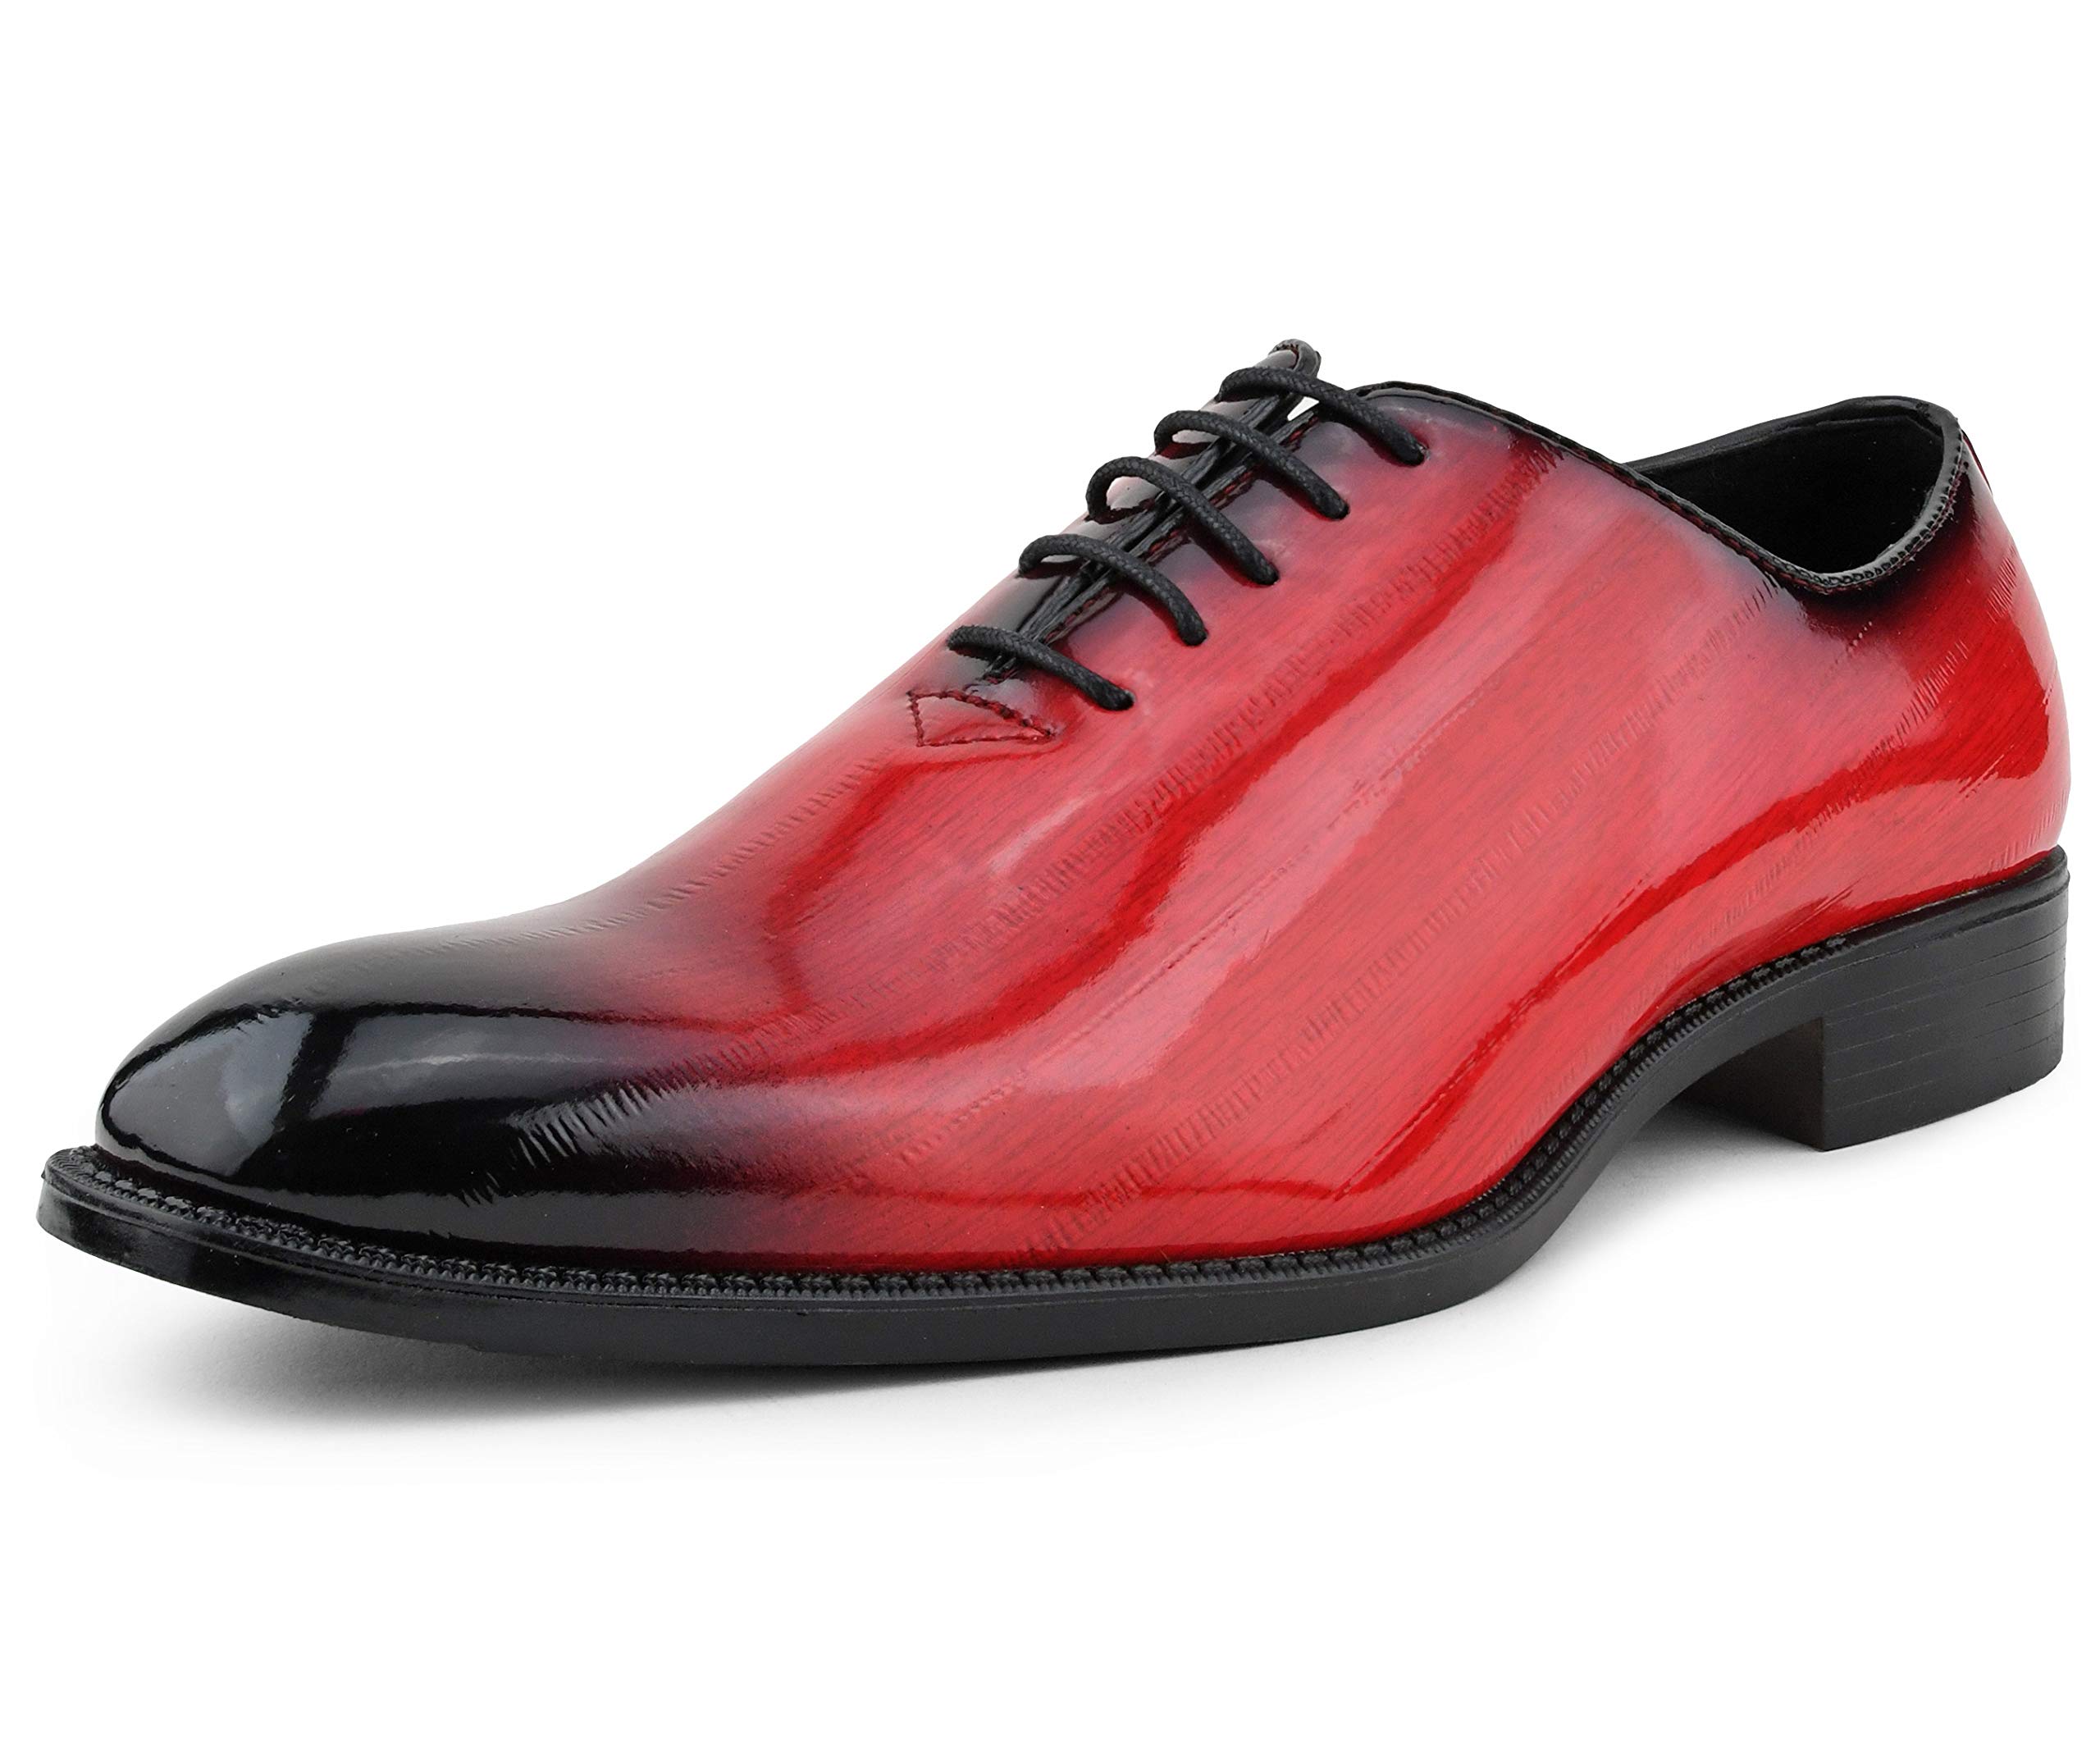 Mua Bolano Brayden - Men's Dress Shoes - Exotic EEL Skin Print, Oxford  Lace-Ups, Black Burnished Toe - Exotic Formal Shoes for Men - Original,  Designer Shoes trên Amazon Mỹ chính hãng 2023 | Giaonhan247